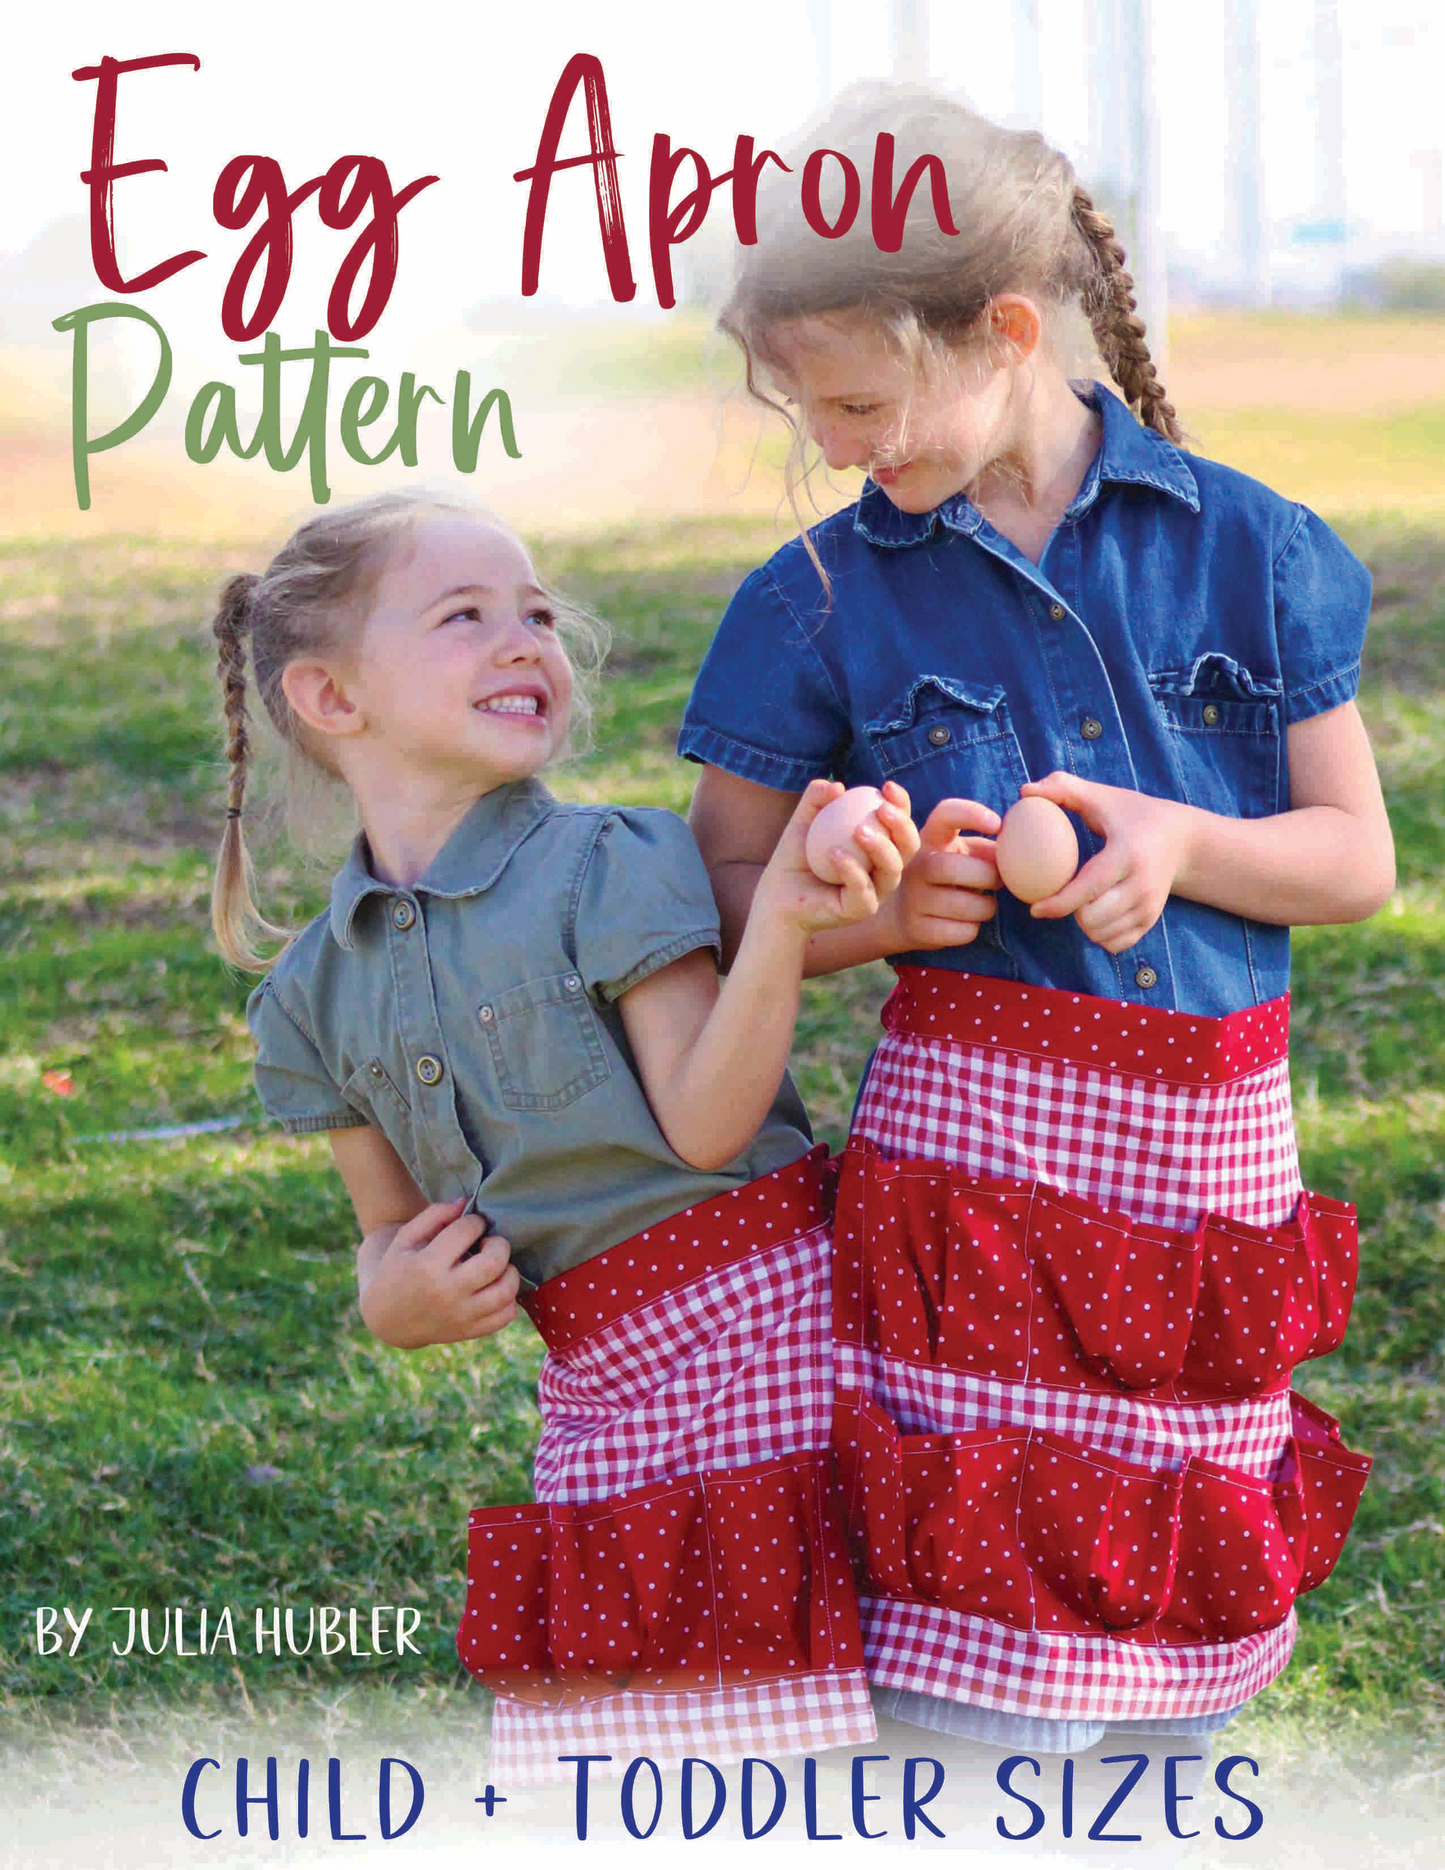 Egg Gathering Apron Pattern {Kids}